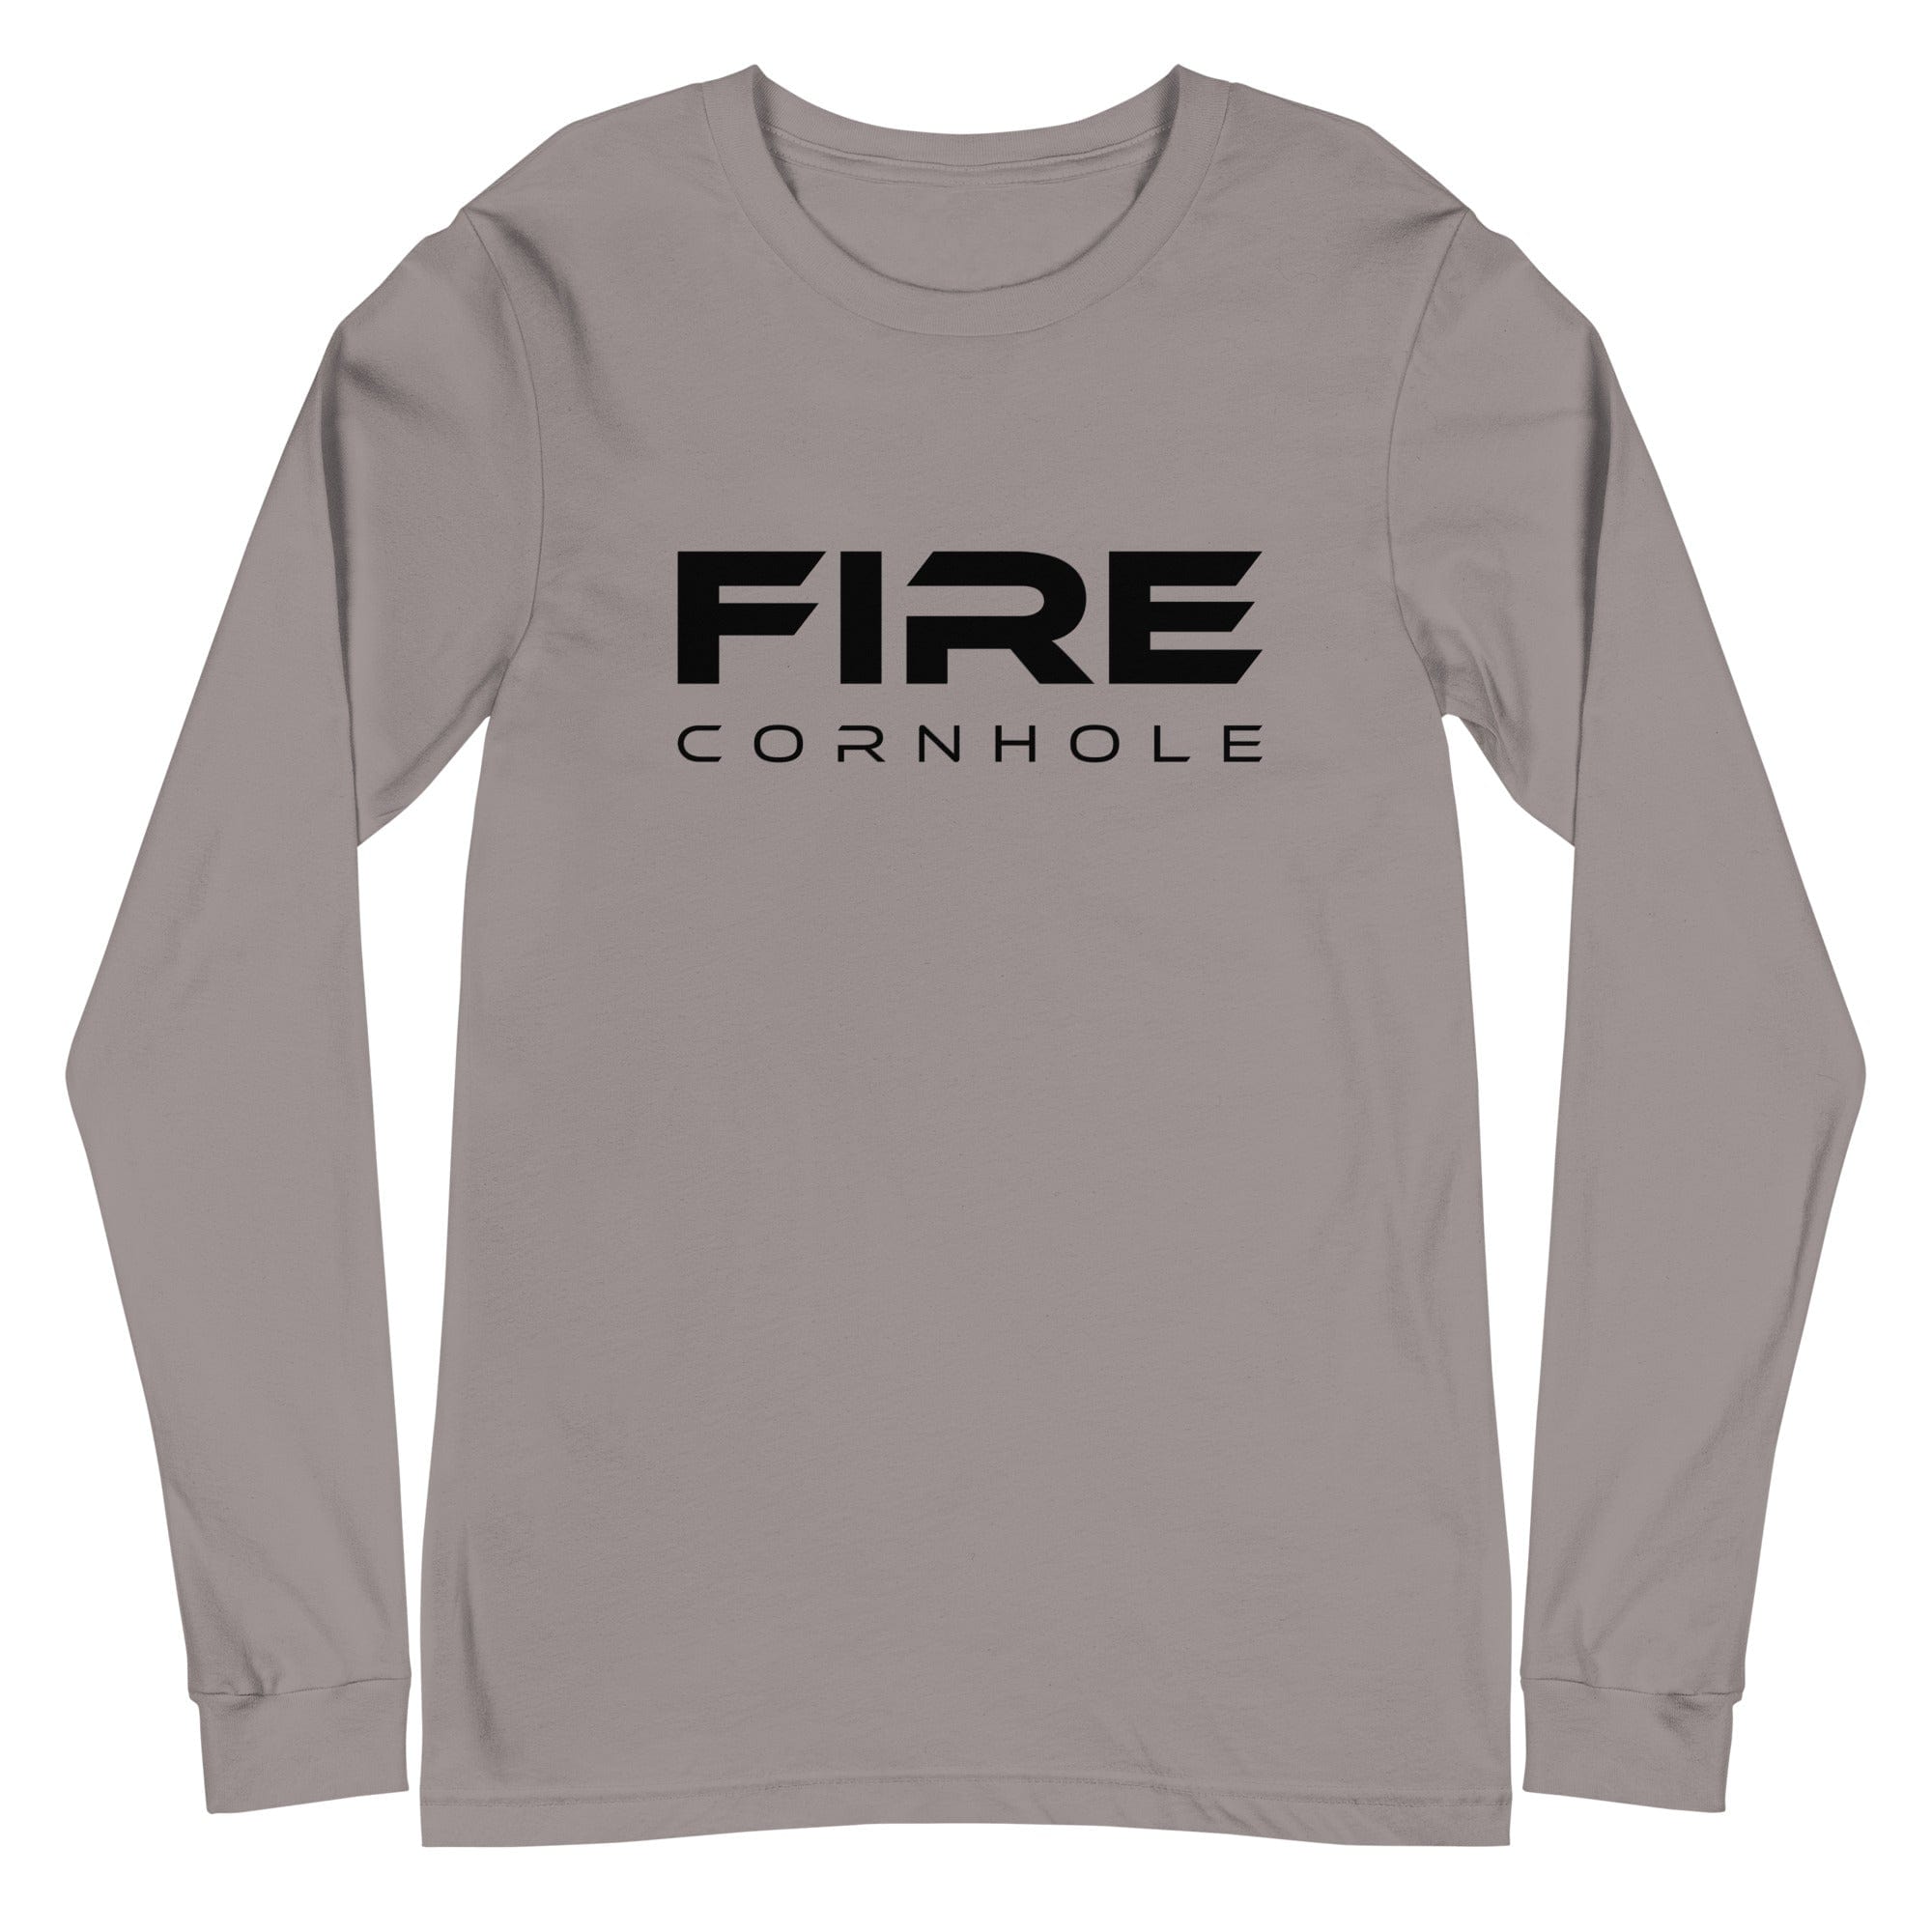 Grey unisex cotton longsleeve shirt with Fire Cornhole logo in black